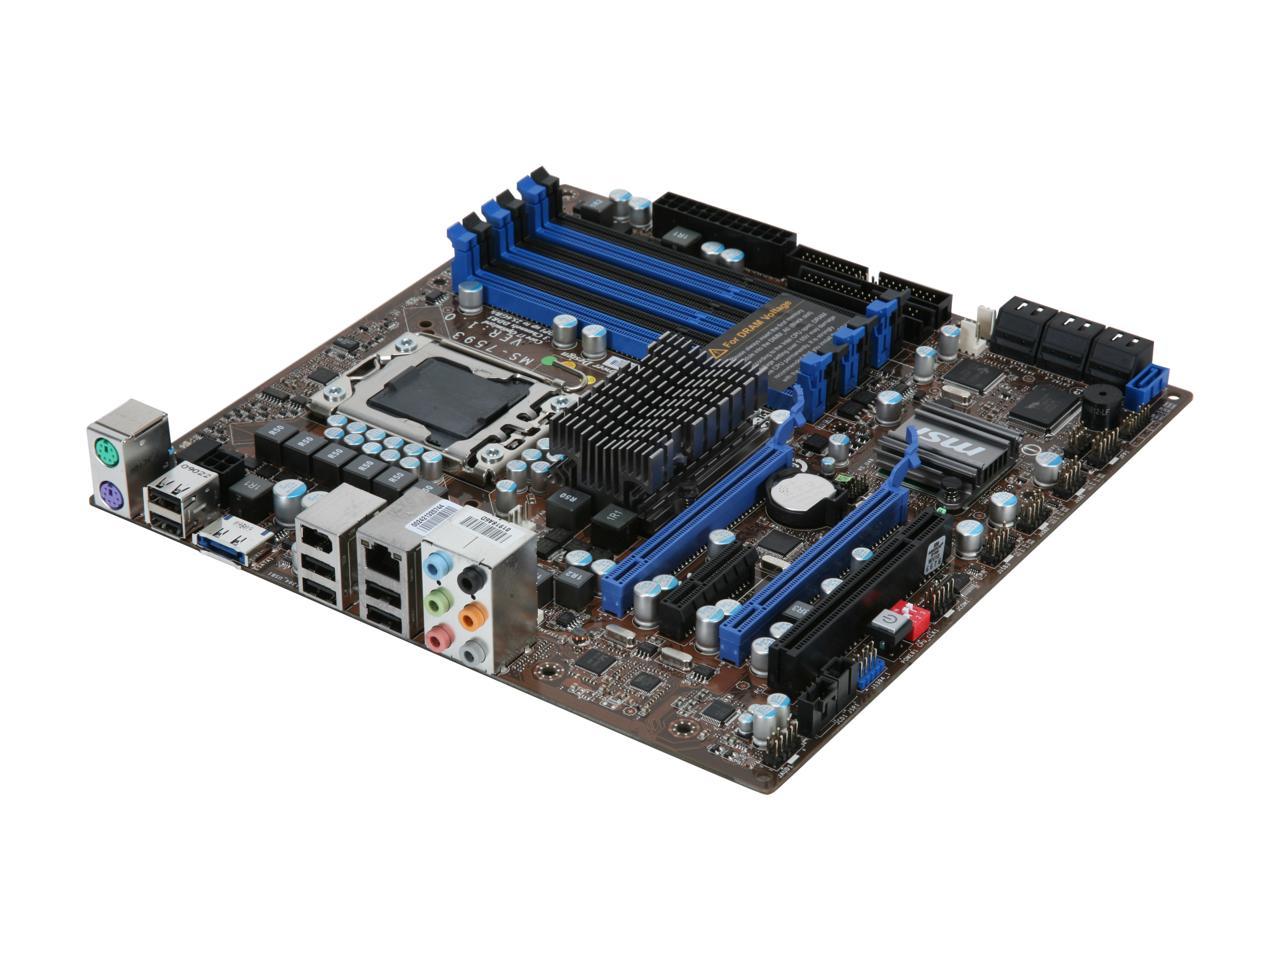 MSI X58M LGA 1366 Intel X58 Micro ATX Intel Motherboard